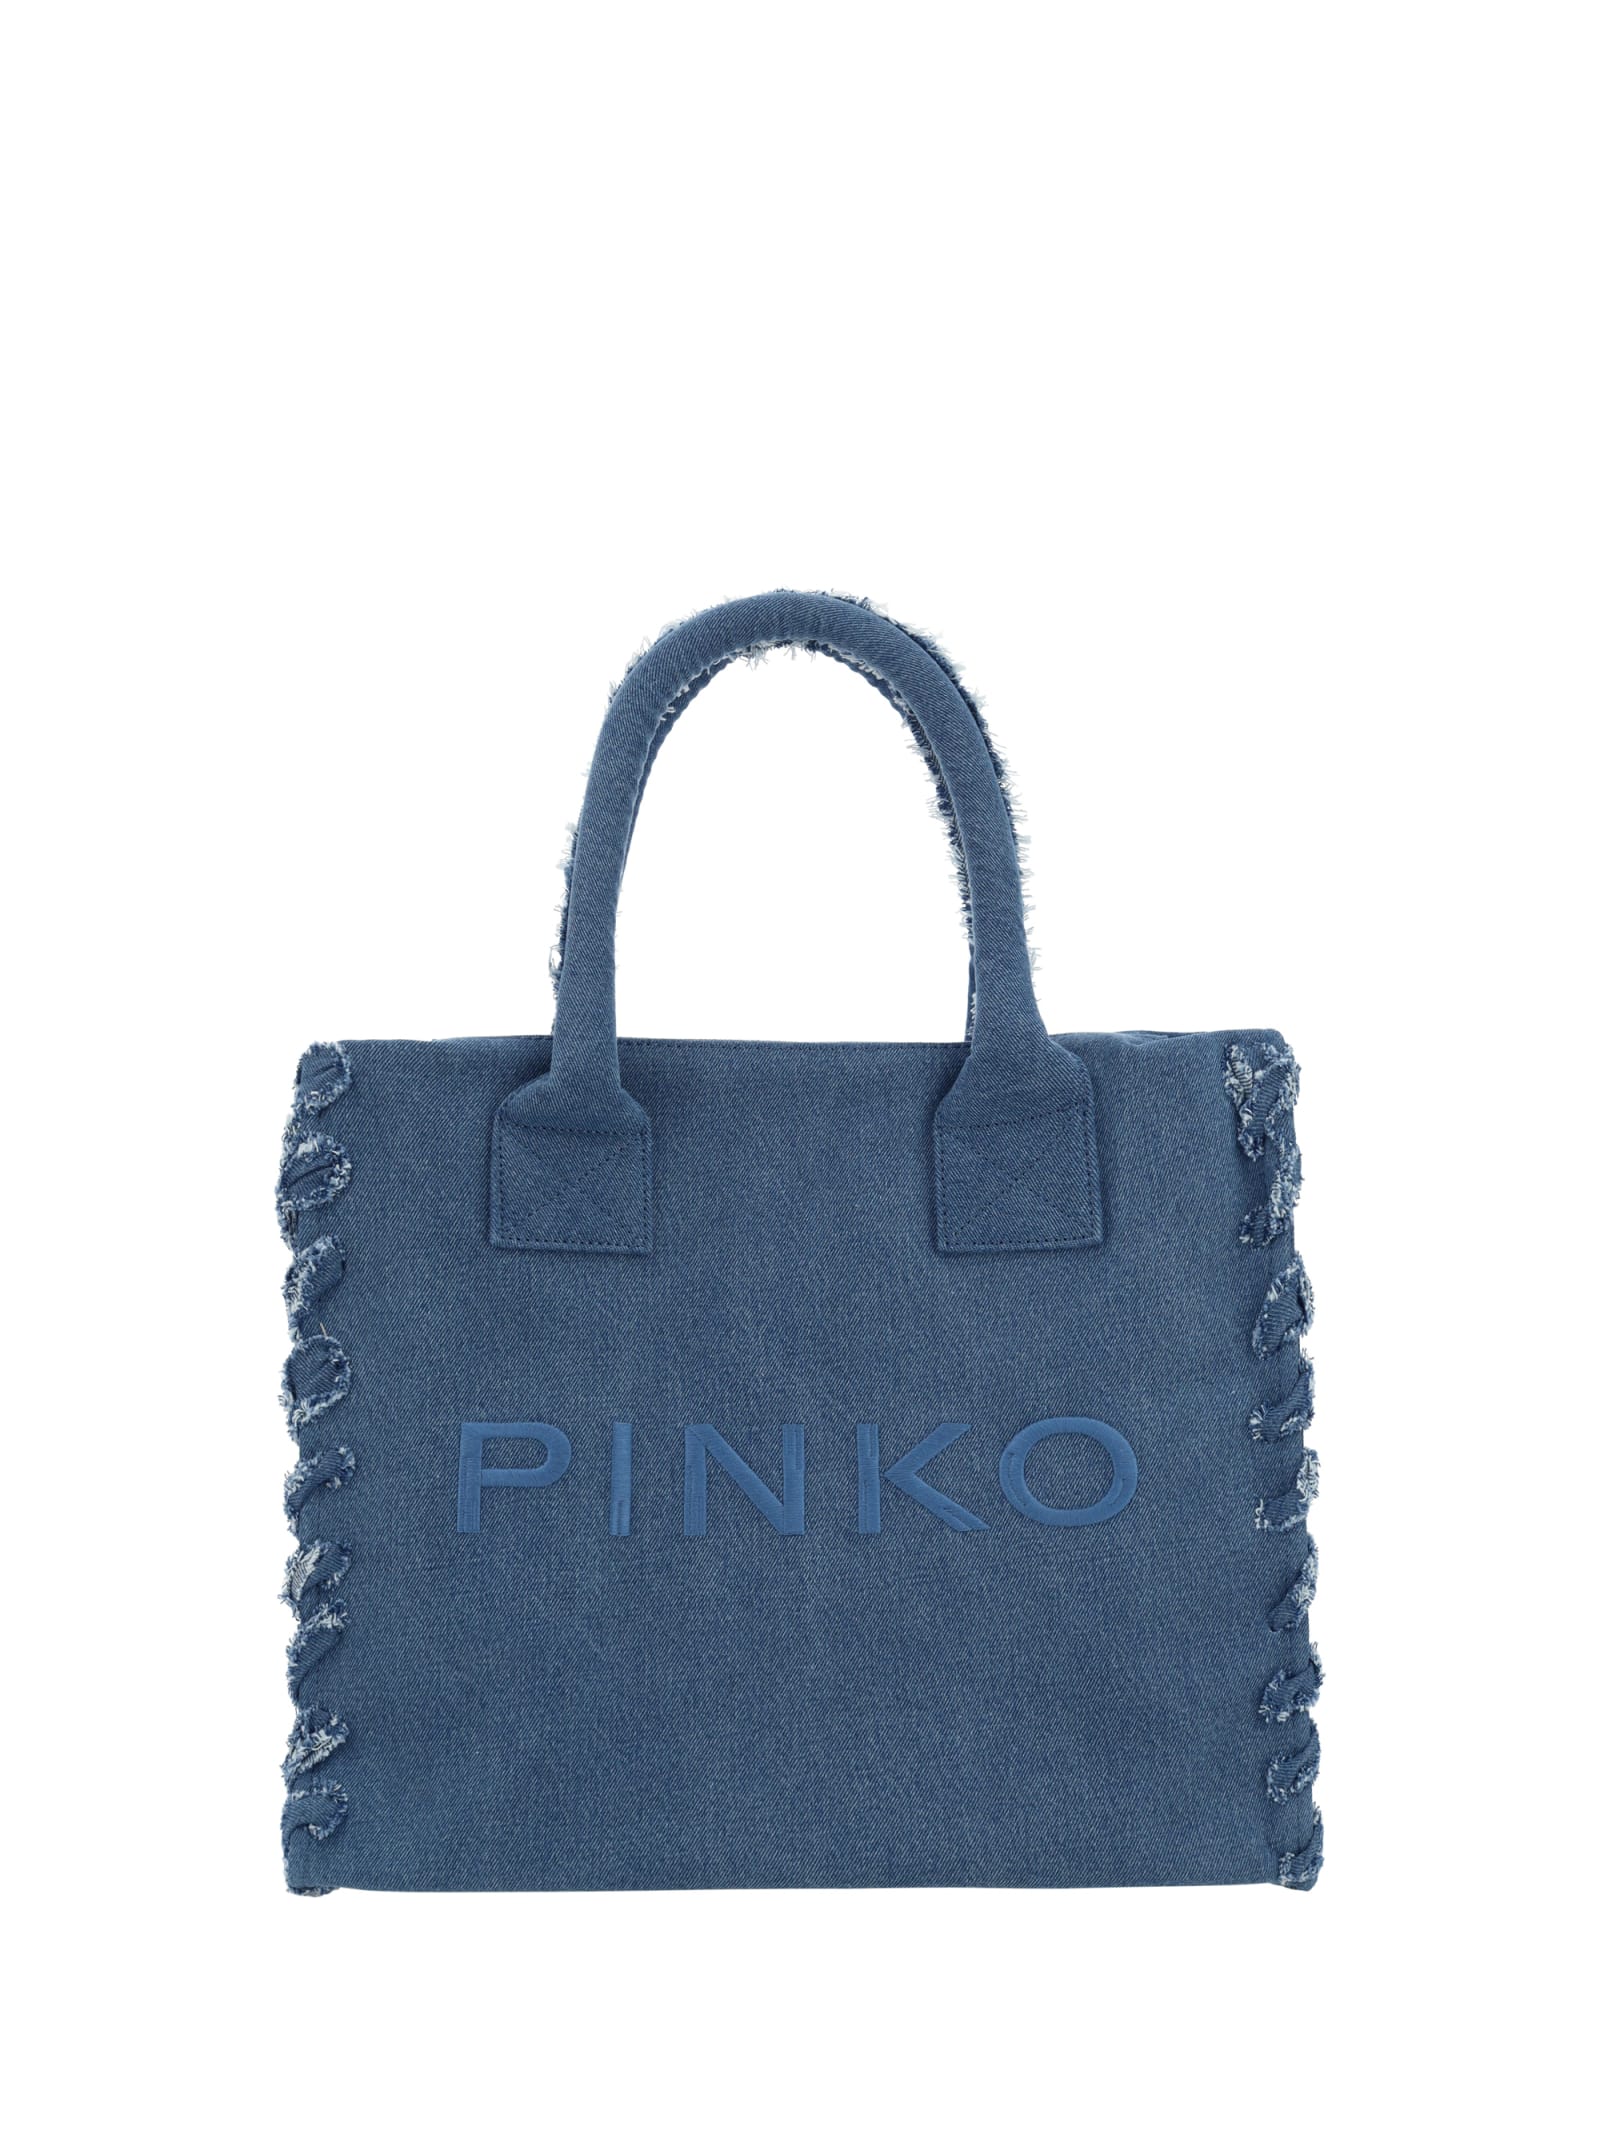 Pinko Beach Handbag In Blue